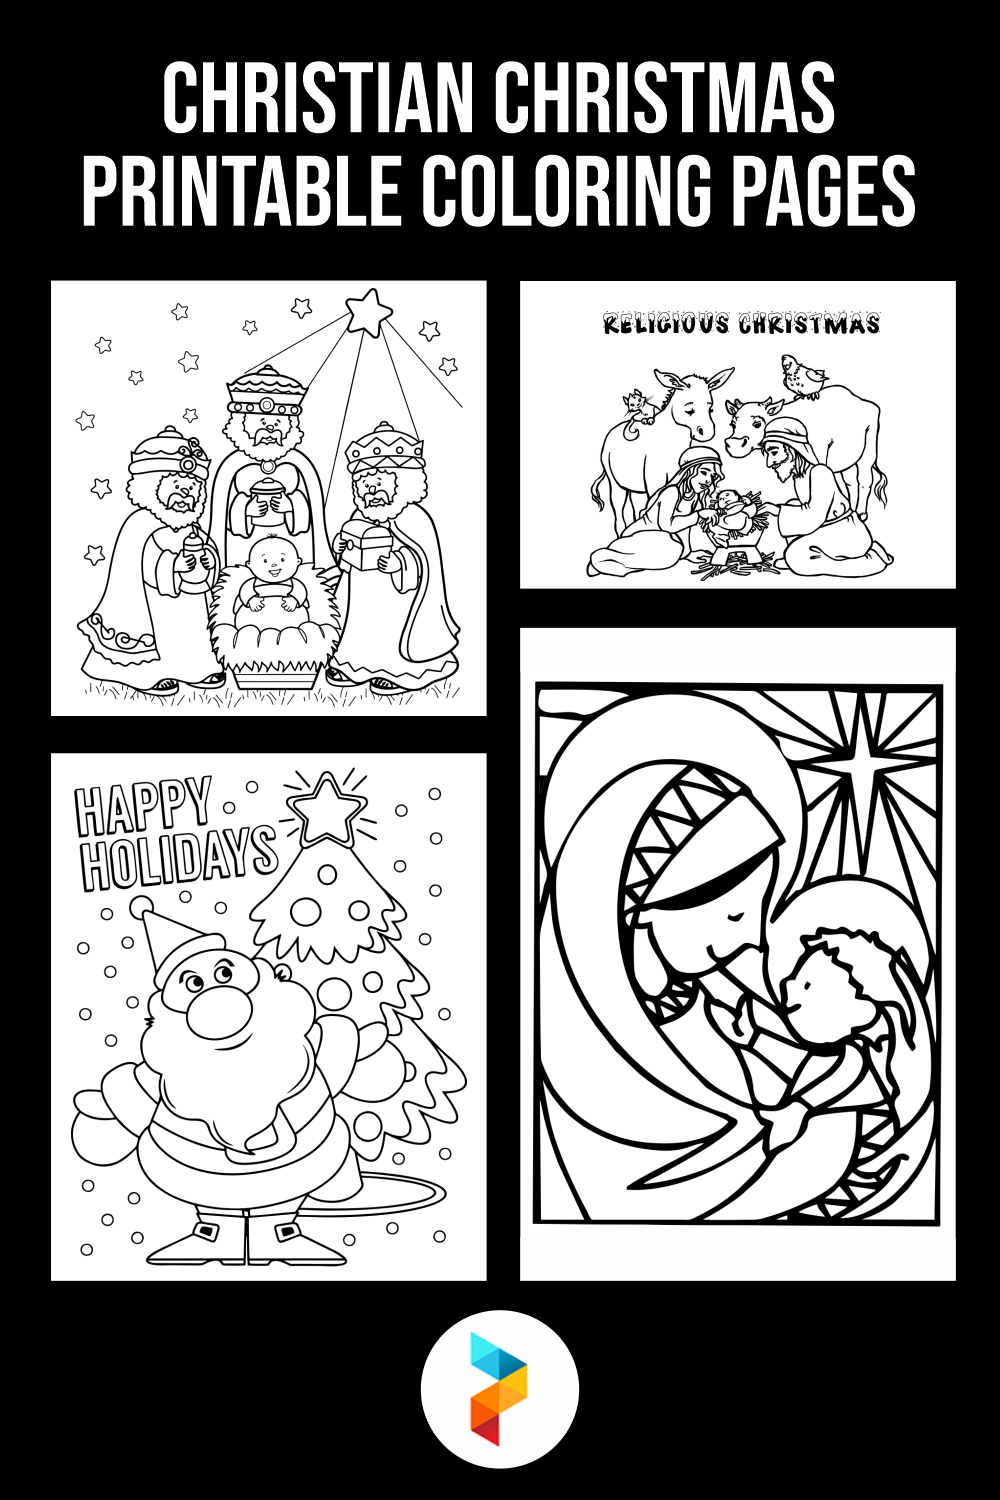 Christian Christmas Printable Coloring Pages